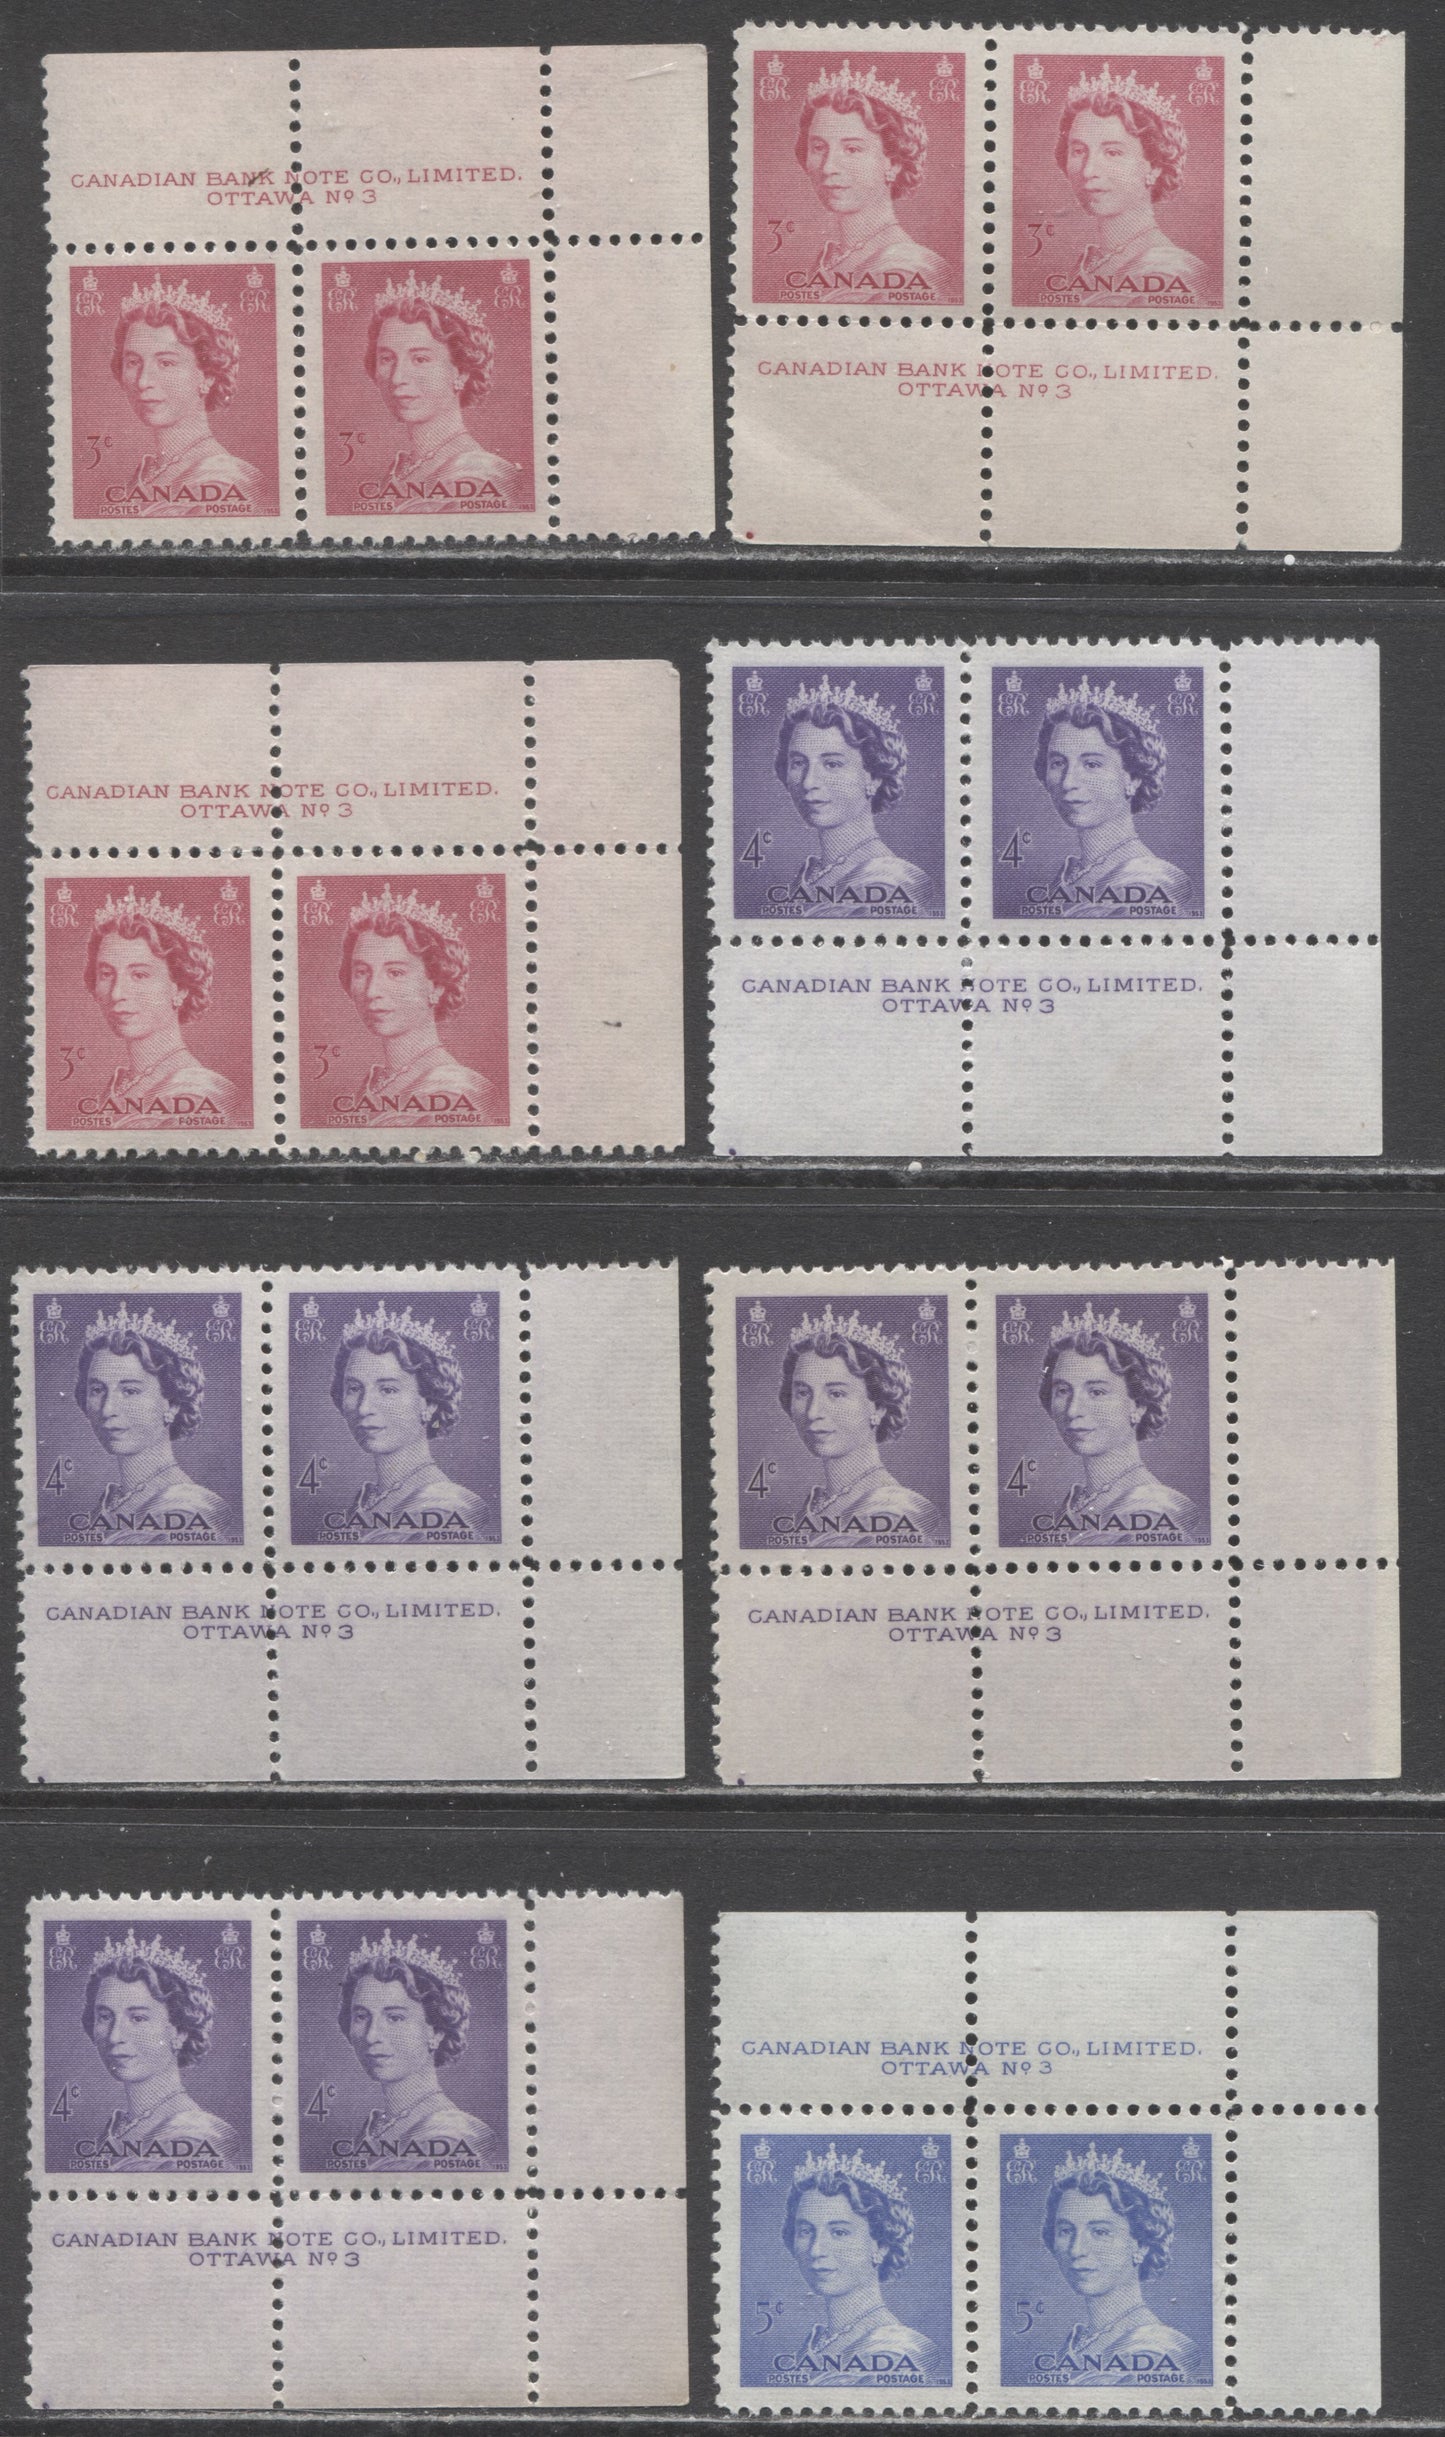 Lot 257 Canada #327-329 3c-5c Cerise, Violet & Ultramarine Queen Elizabeth II, 1953-1954 Karsh Issue, 8 VFNH Plate 3 Inscription Pairs, Different Perfs